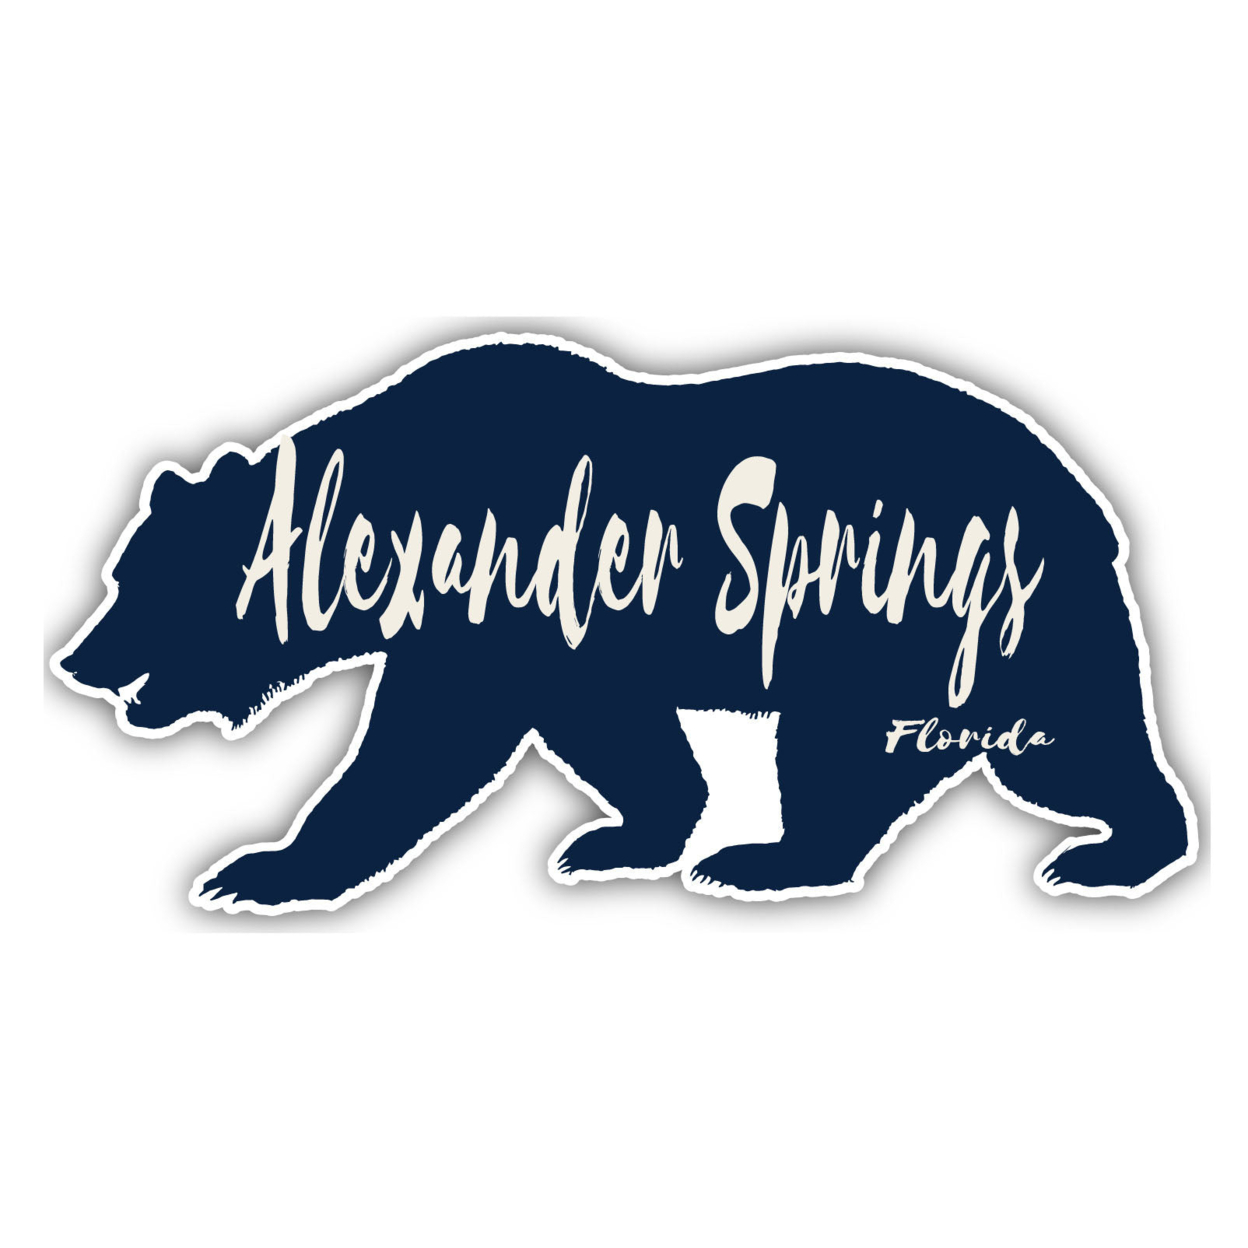 Alexander Springs Florida Souvenir Decorative Stickers (Choose Theme And Size) - Single Unit, 12-Inch, Camp Life